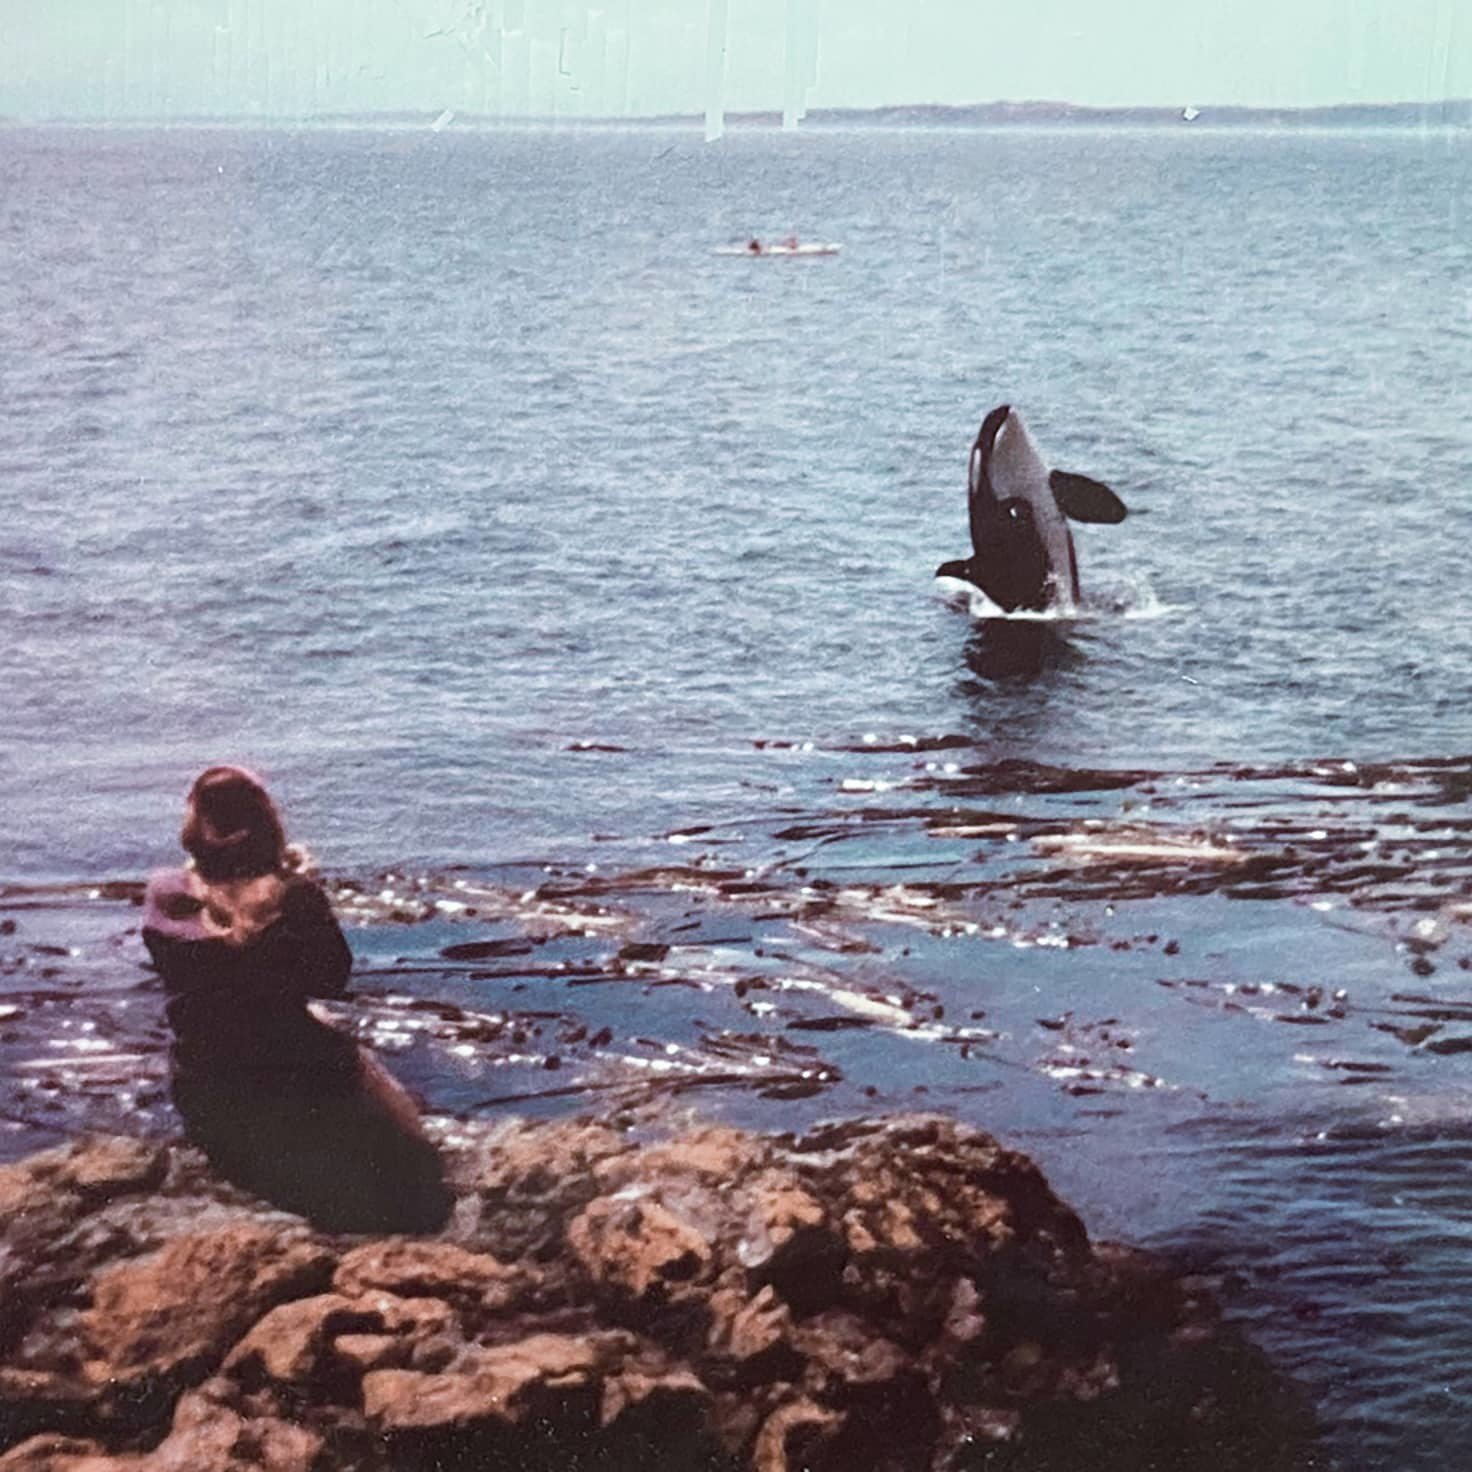 Deborah Giles sitting on rocks watching a killer whale breach in 1987.